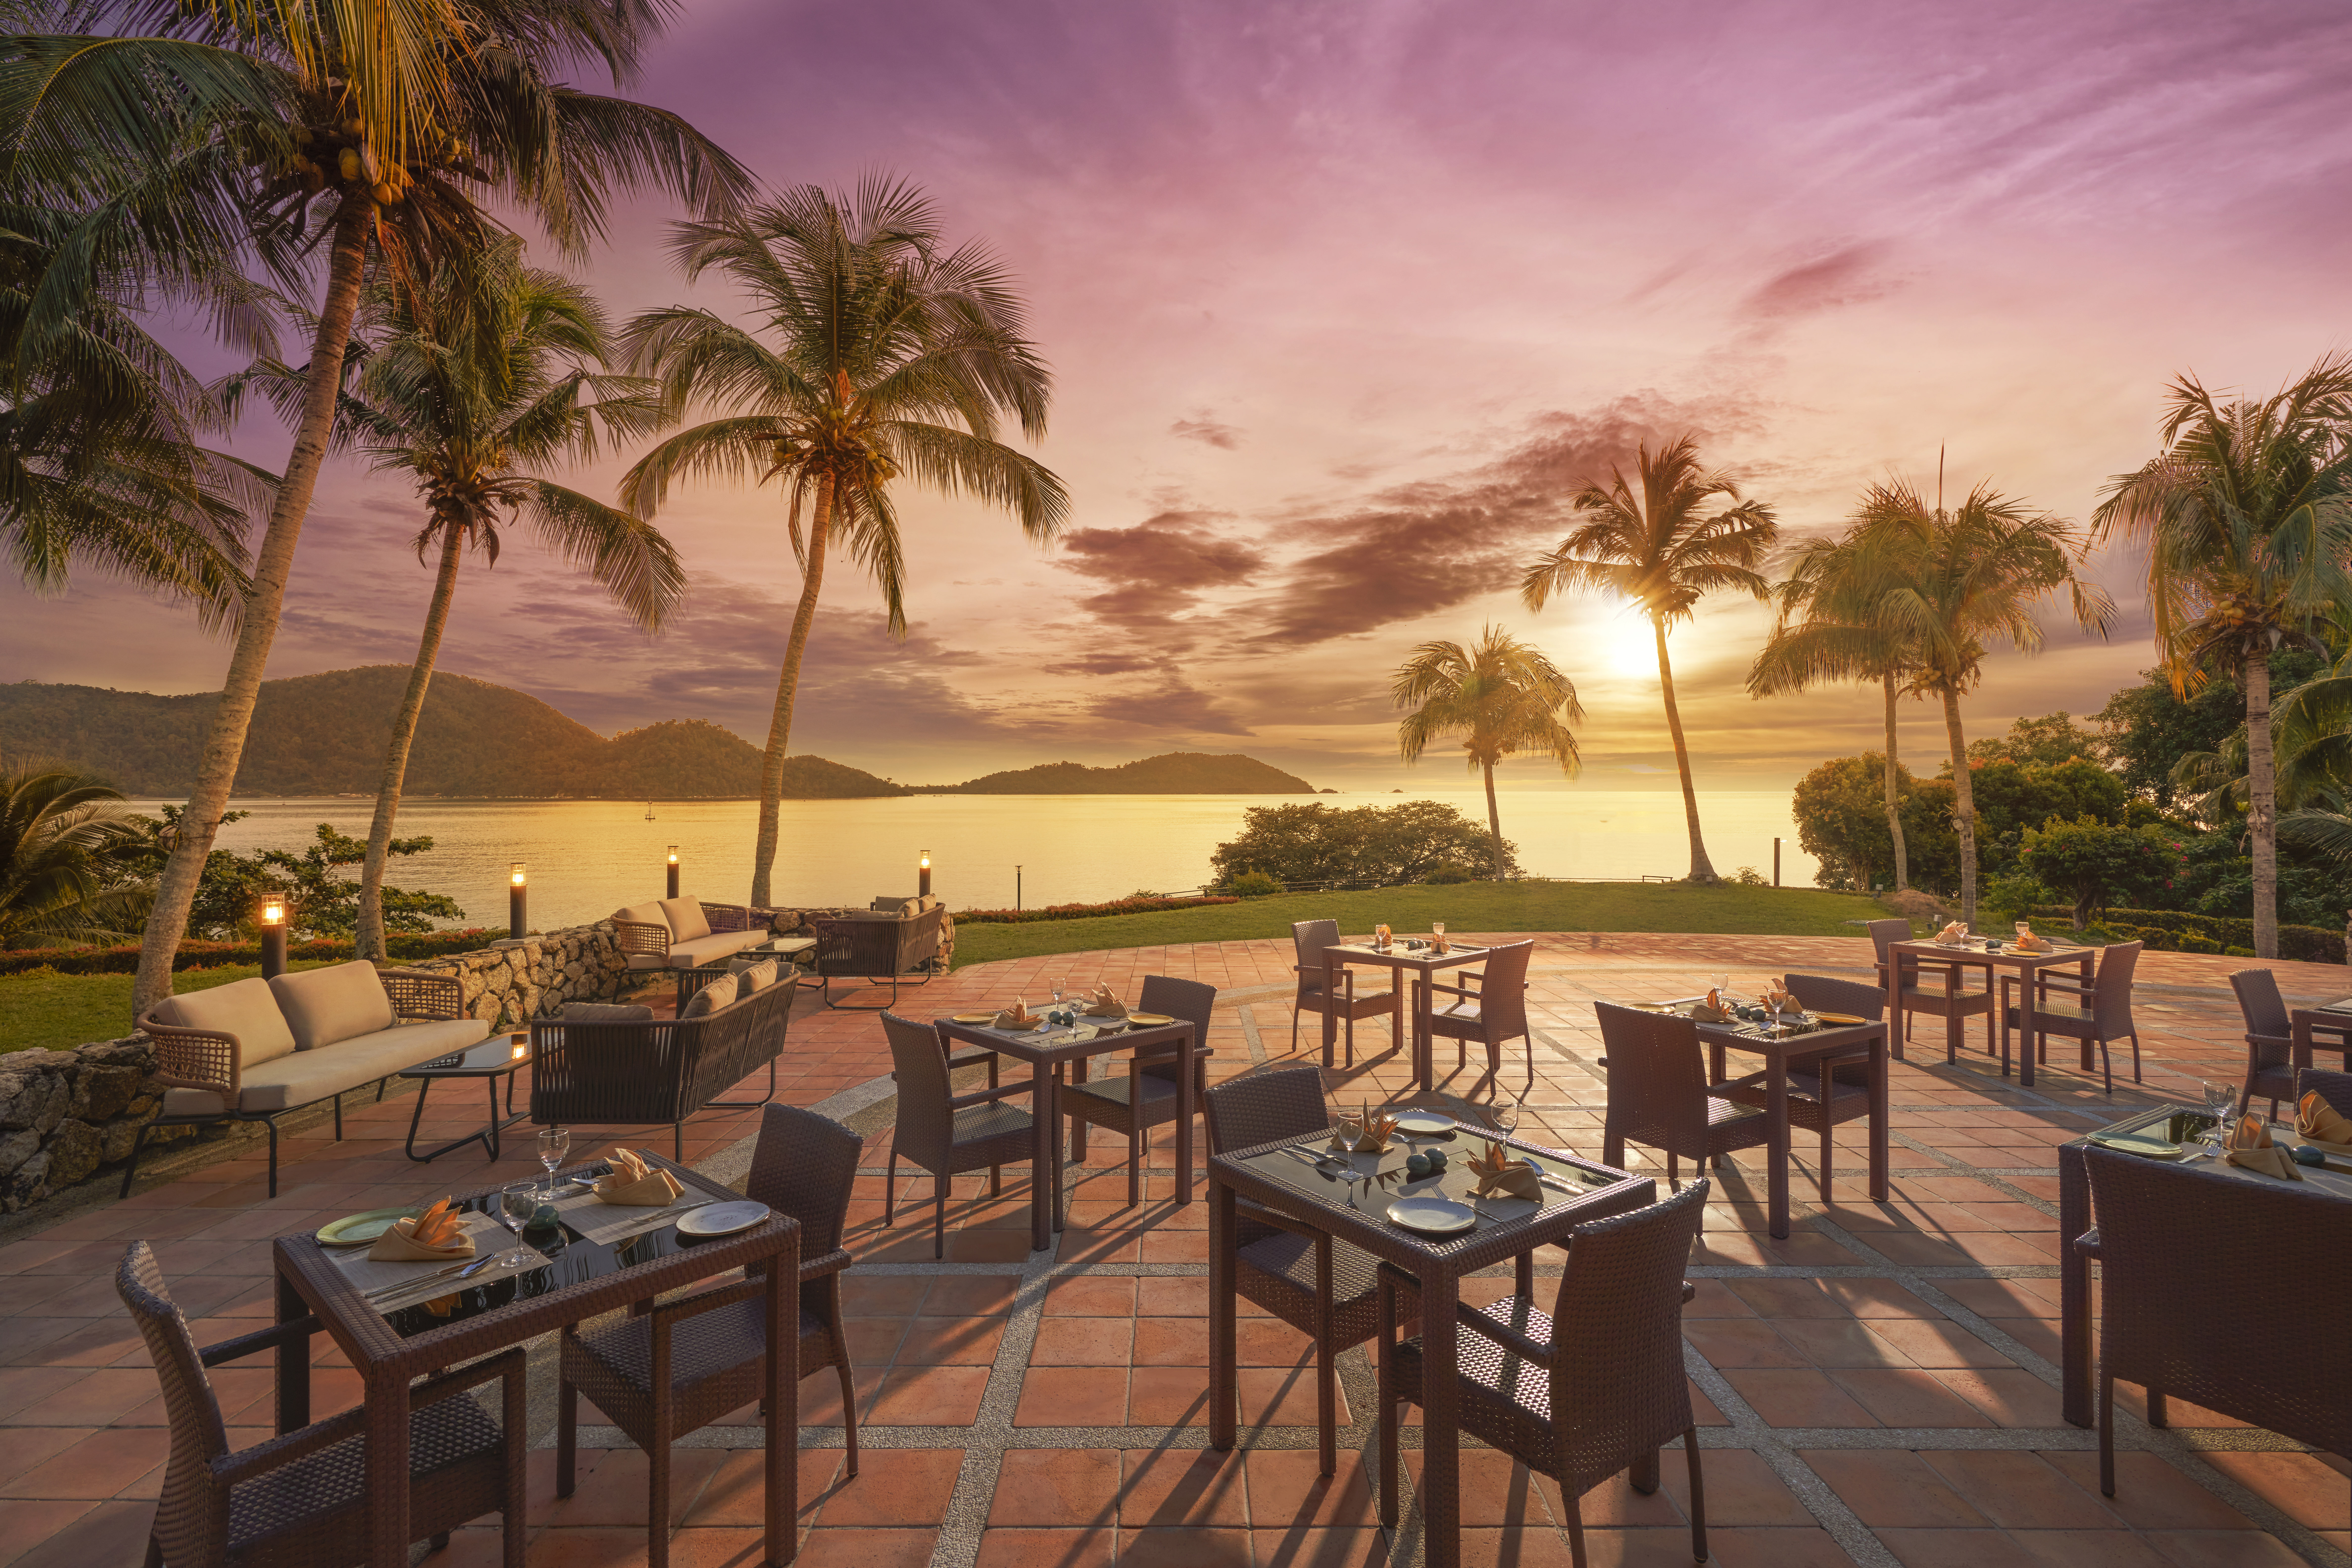 hotel DoubleTree by Hilton Damai Laut Resort - Makan Kitchen Outdoor Seating - Sunset